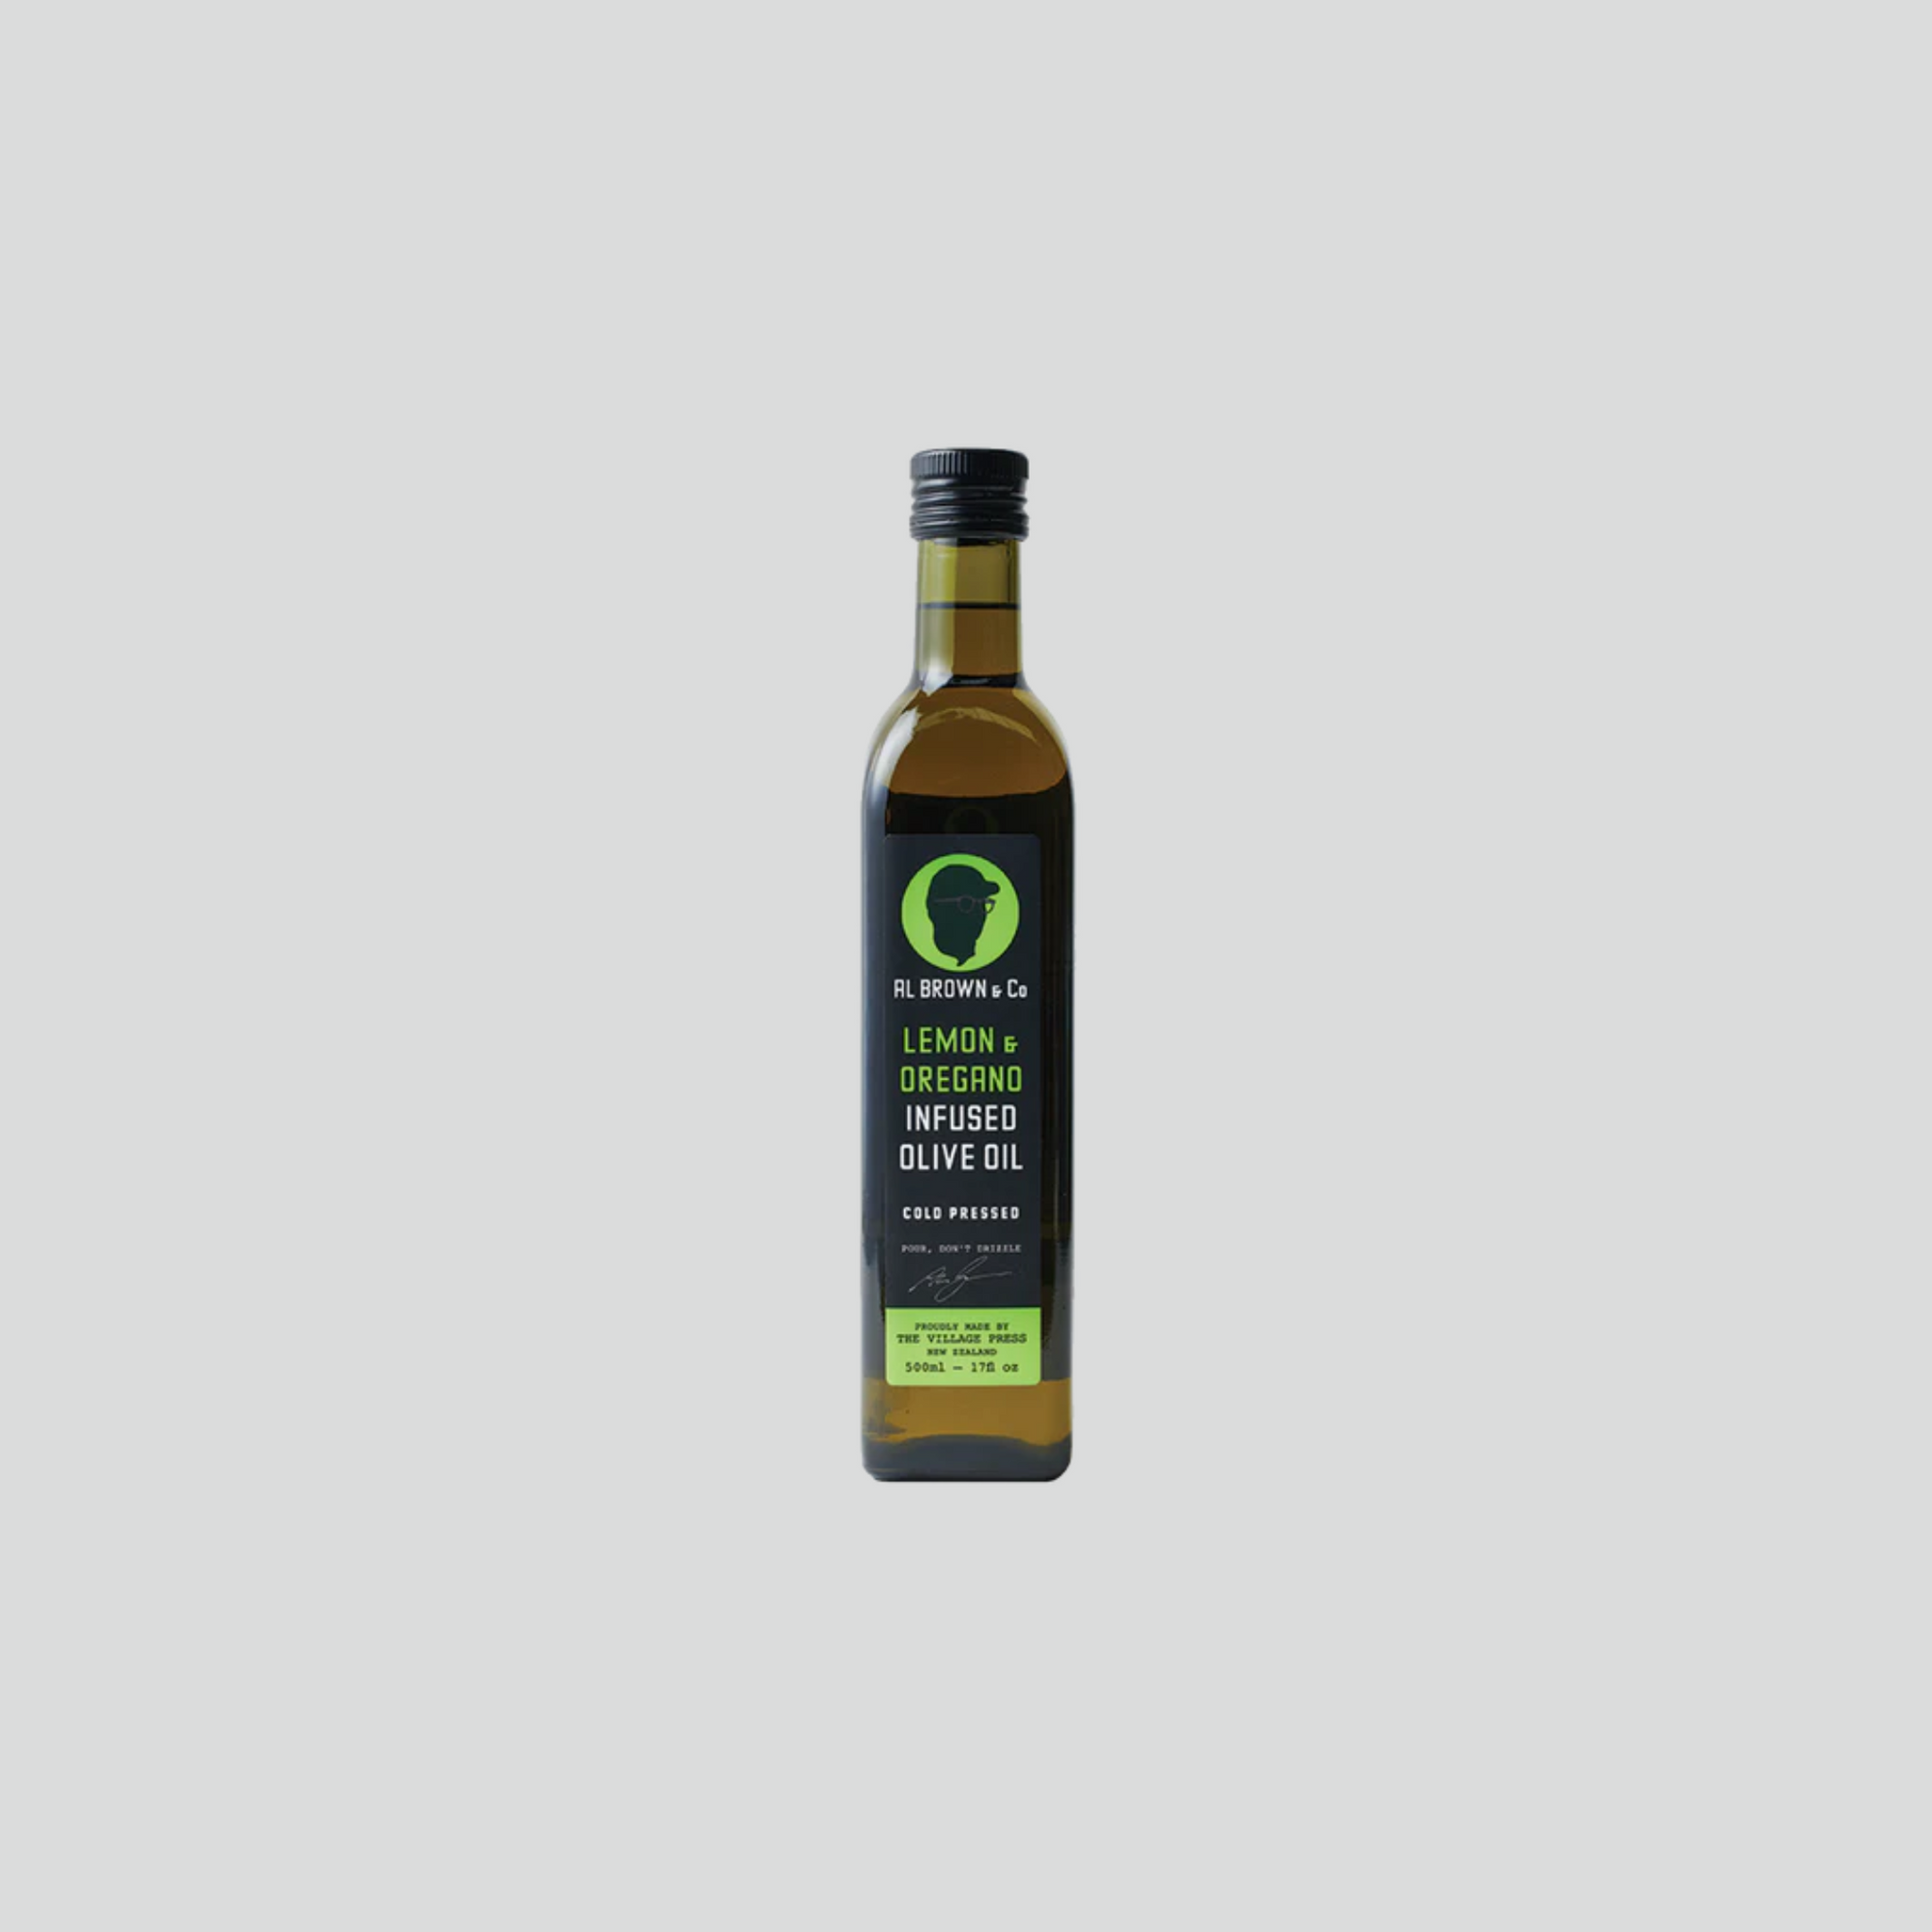 Al Browns Infused Olive Oil - Lemon & Oregano